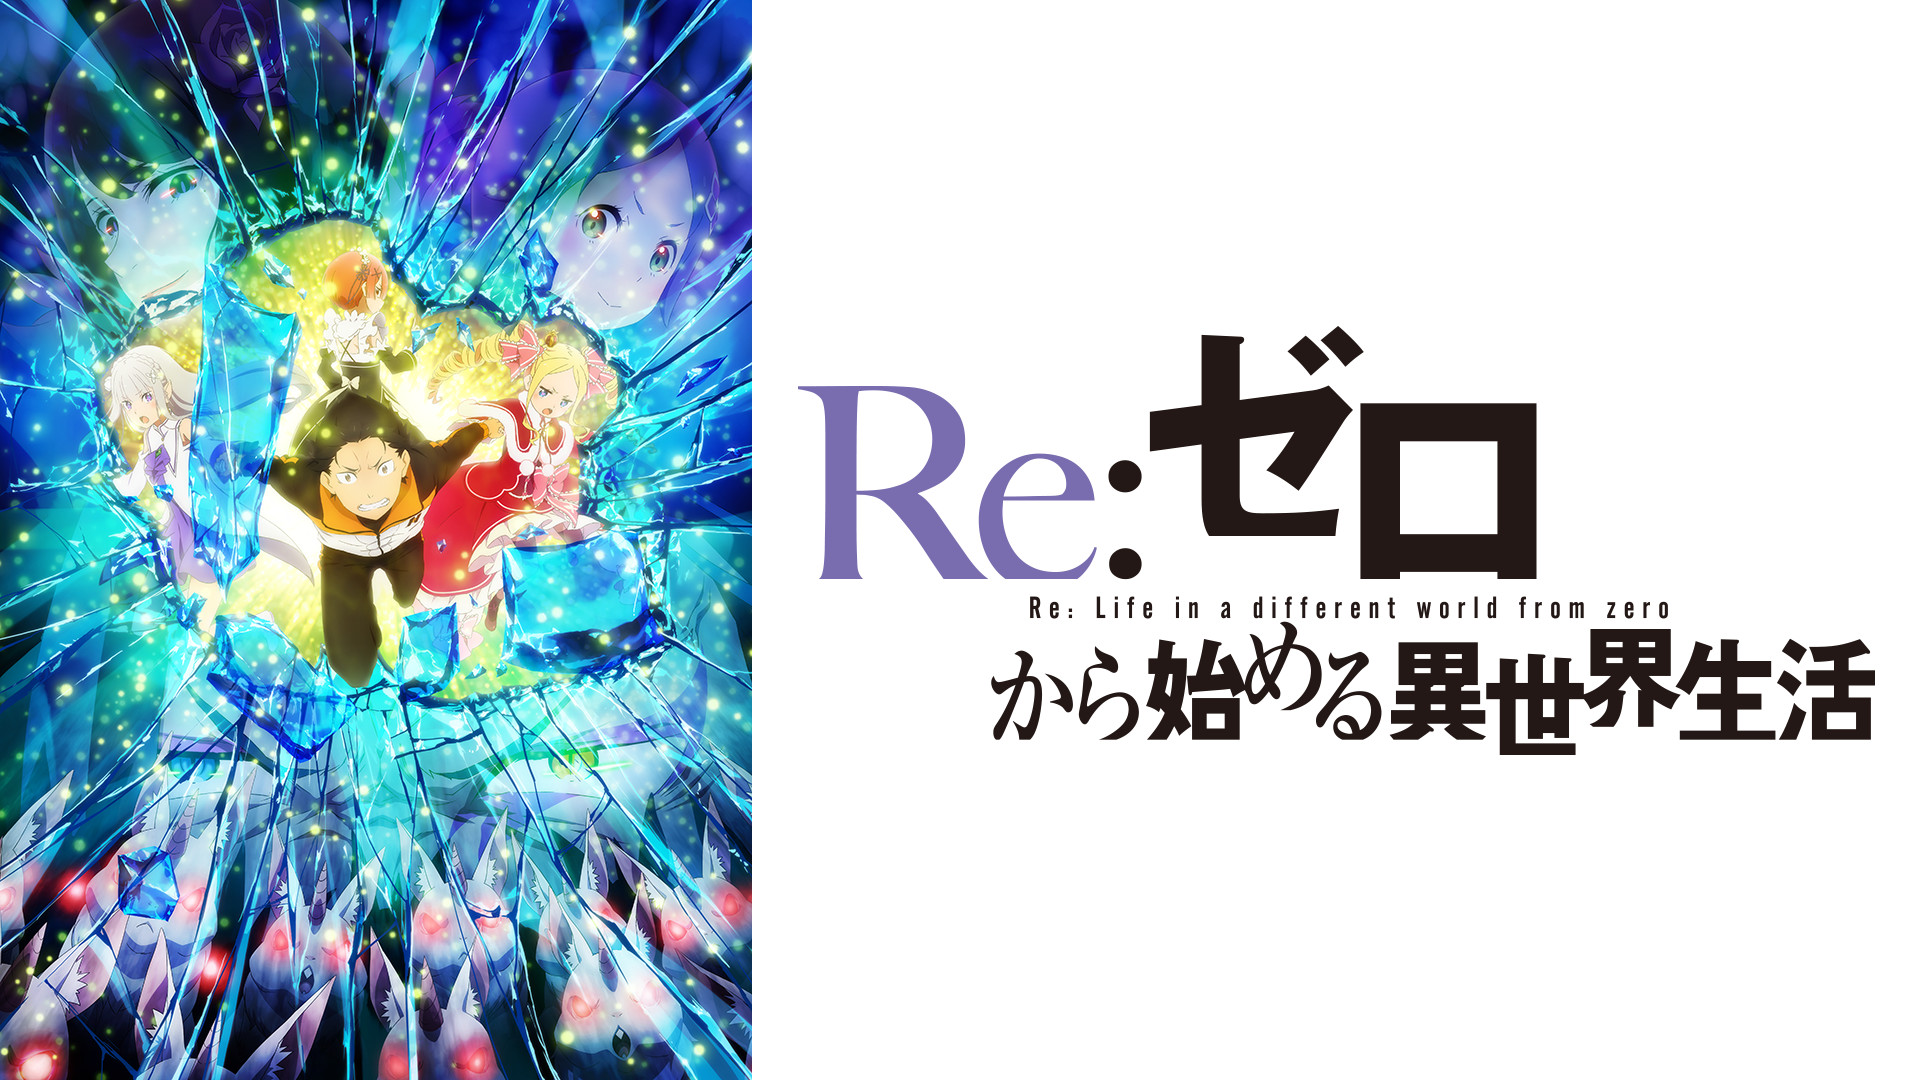 Re:ゼロから始める異世界生活 2nd season | アニメ動画見放題 | dアニメストア